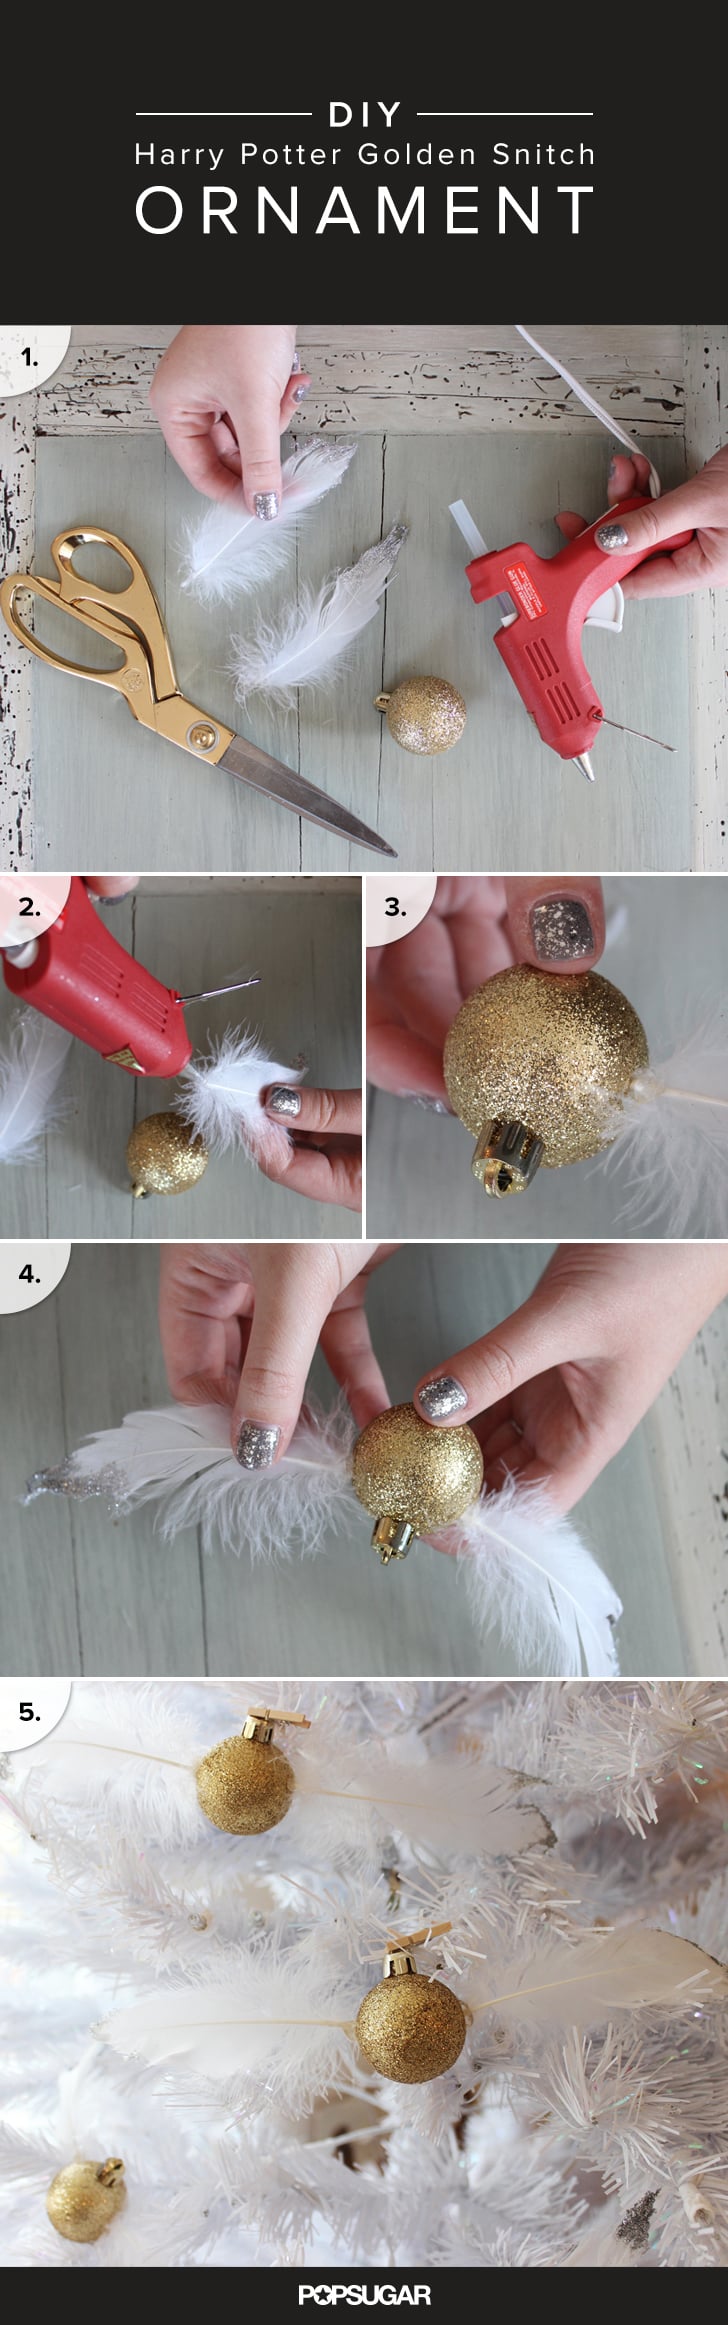 DIY Golden Snitches